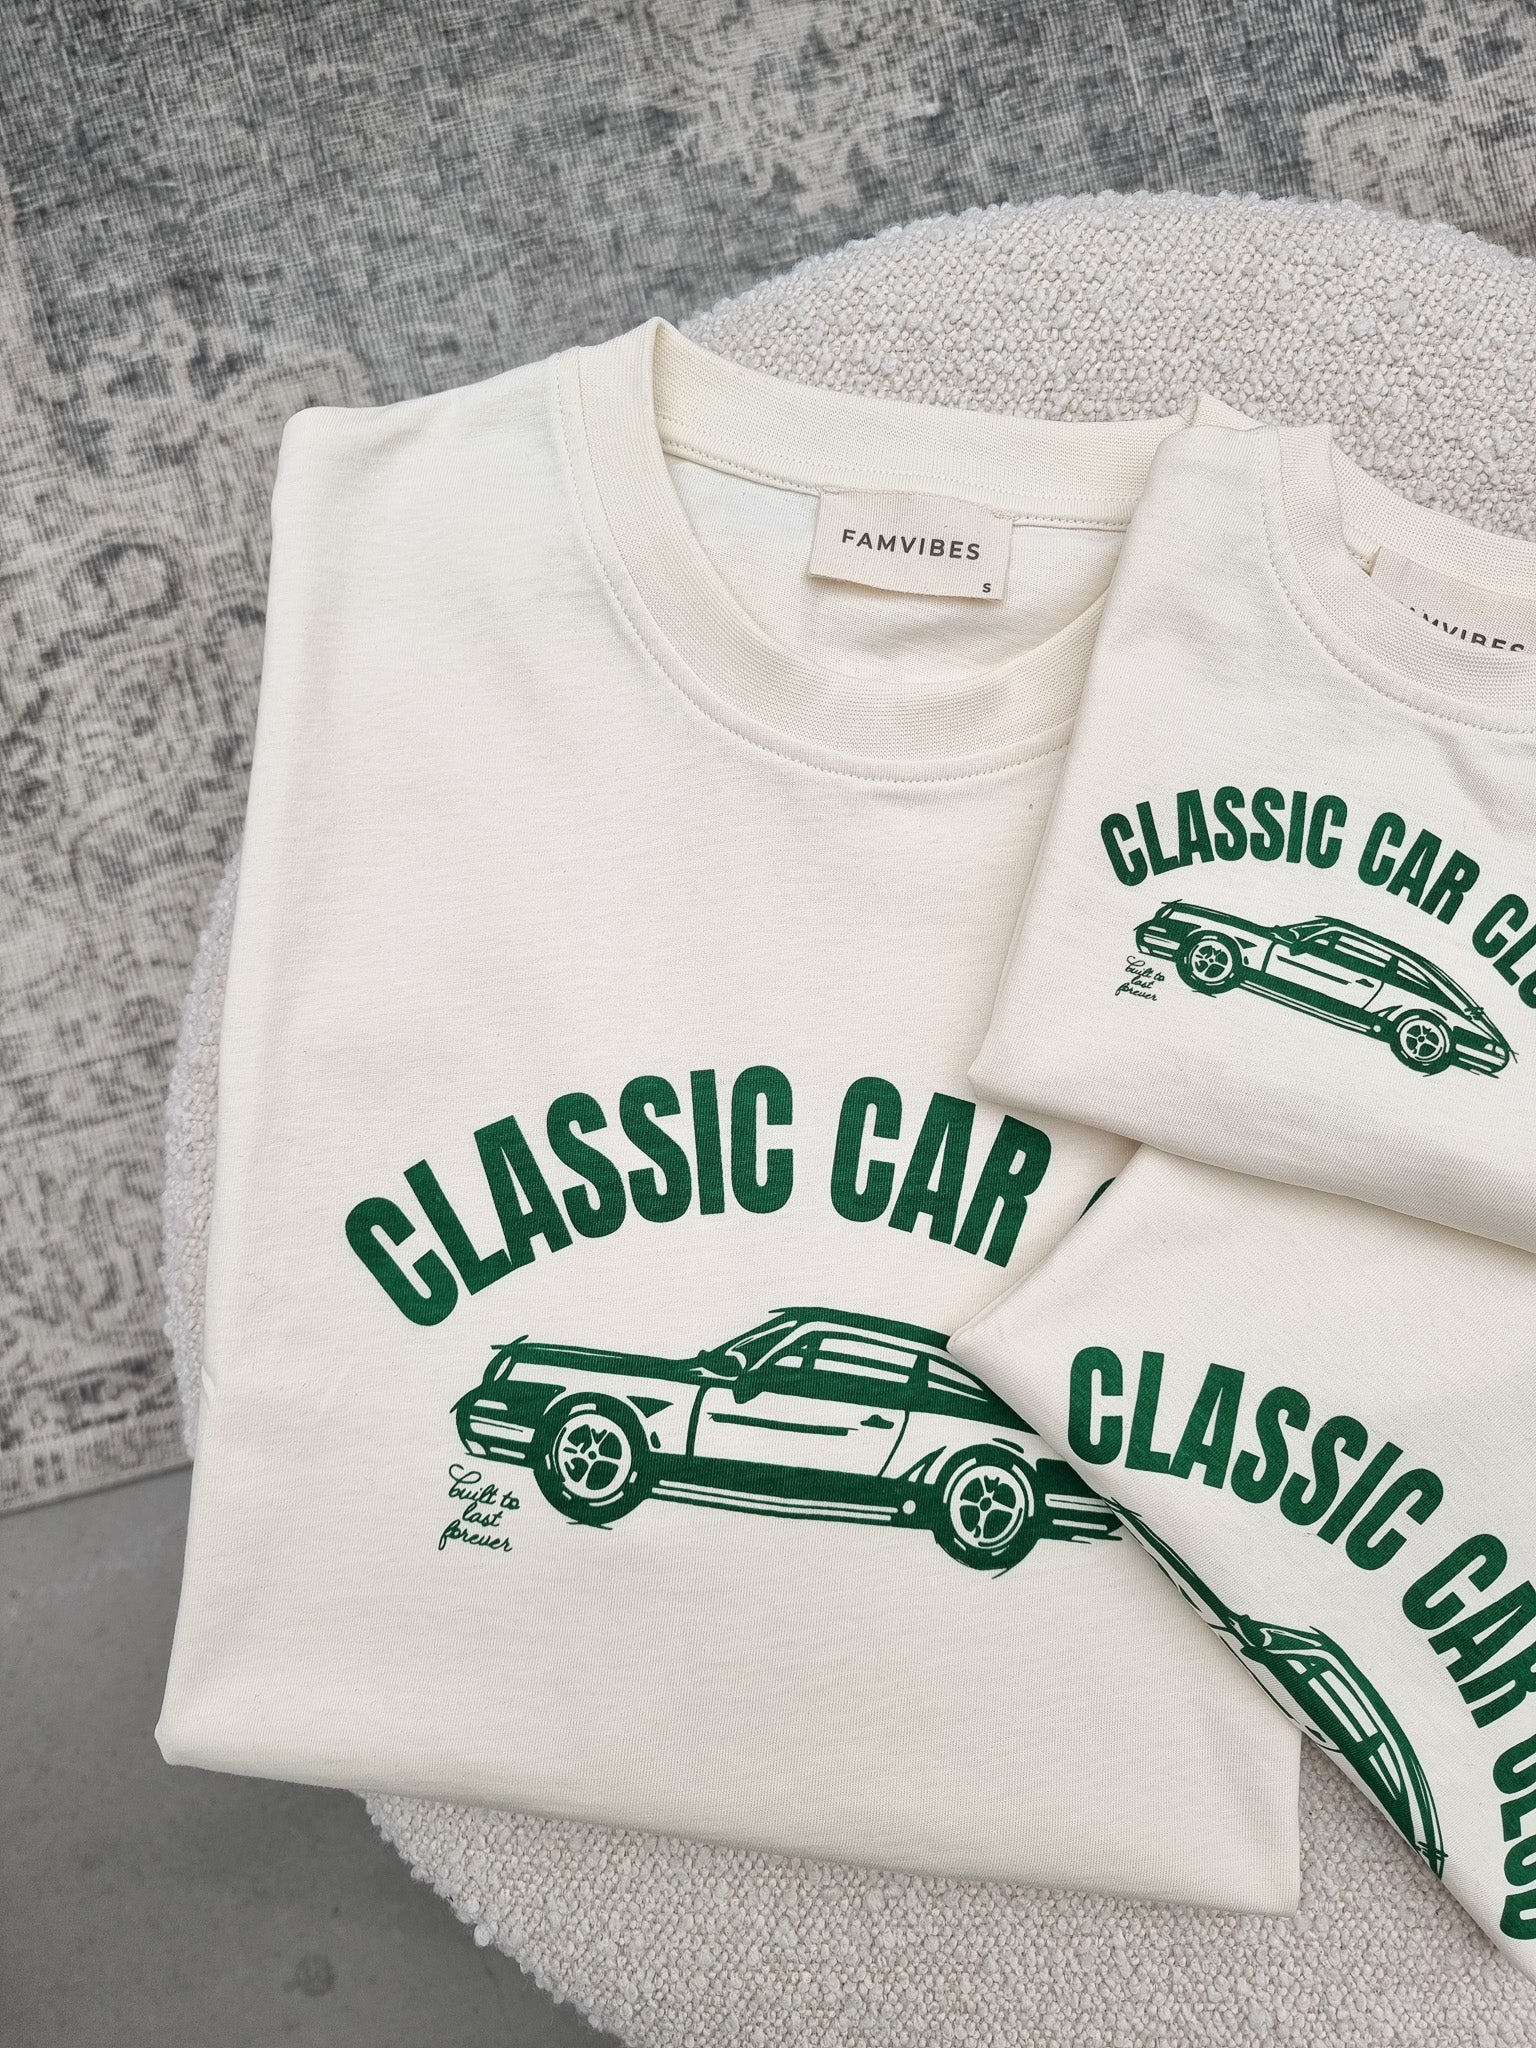 CLASSIC CAR CLUB Shirt Baby - FAMVIBES 